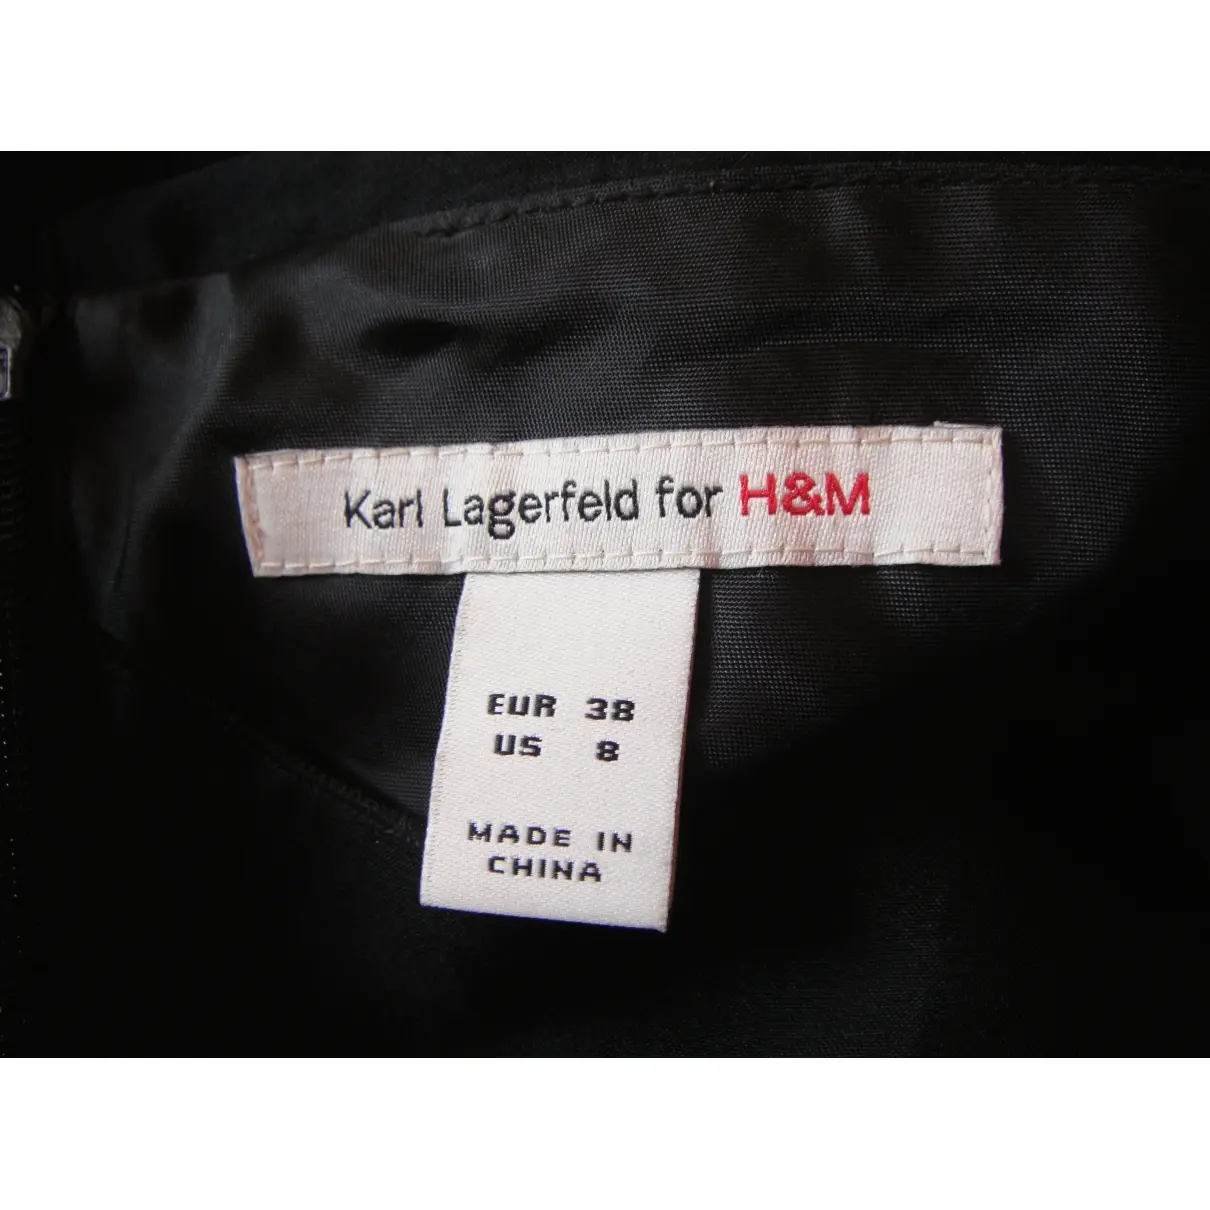 Buy Karl Lagerfeld Pour H&M Silk mid-length dress online